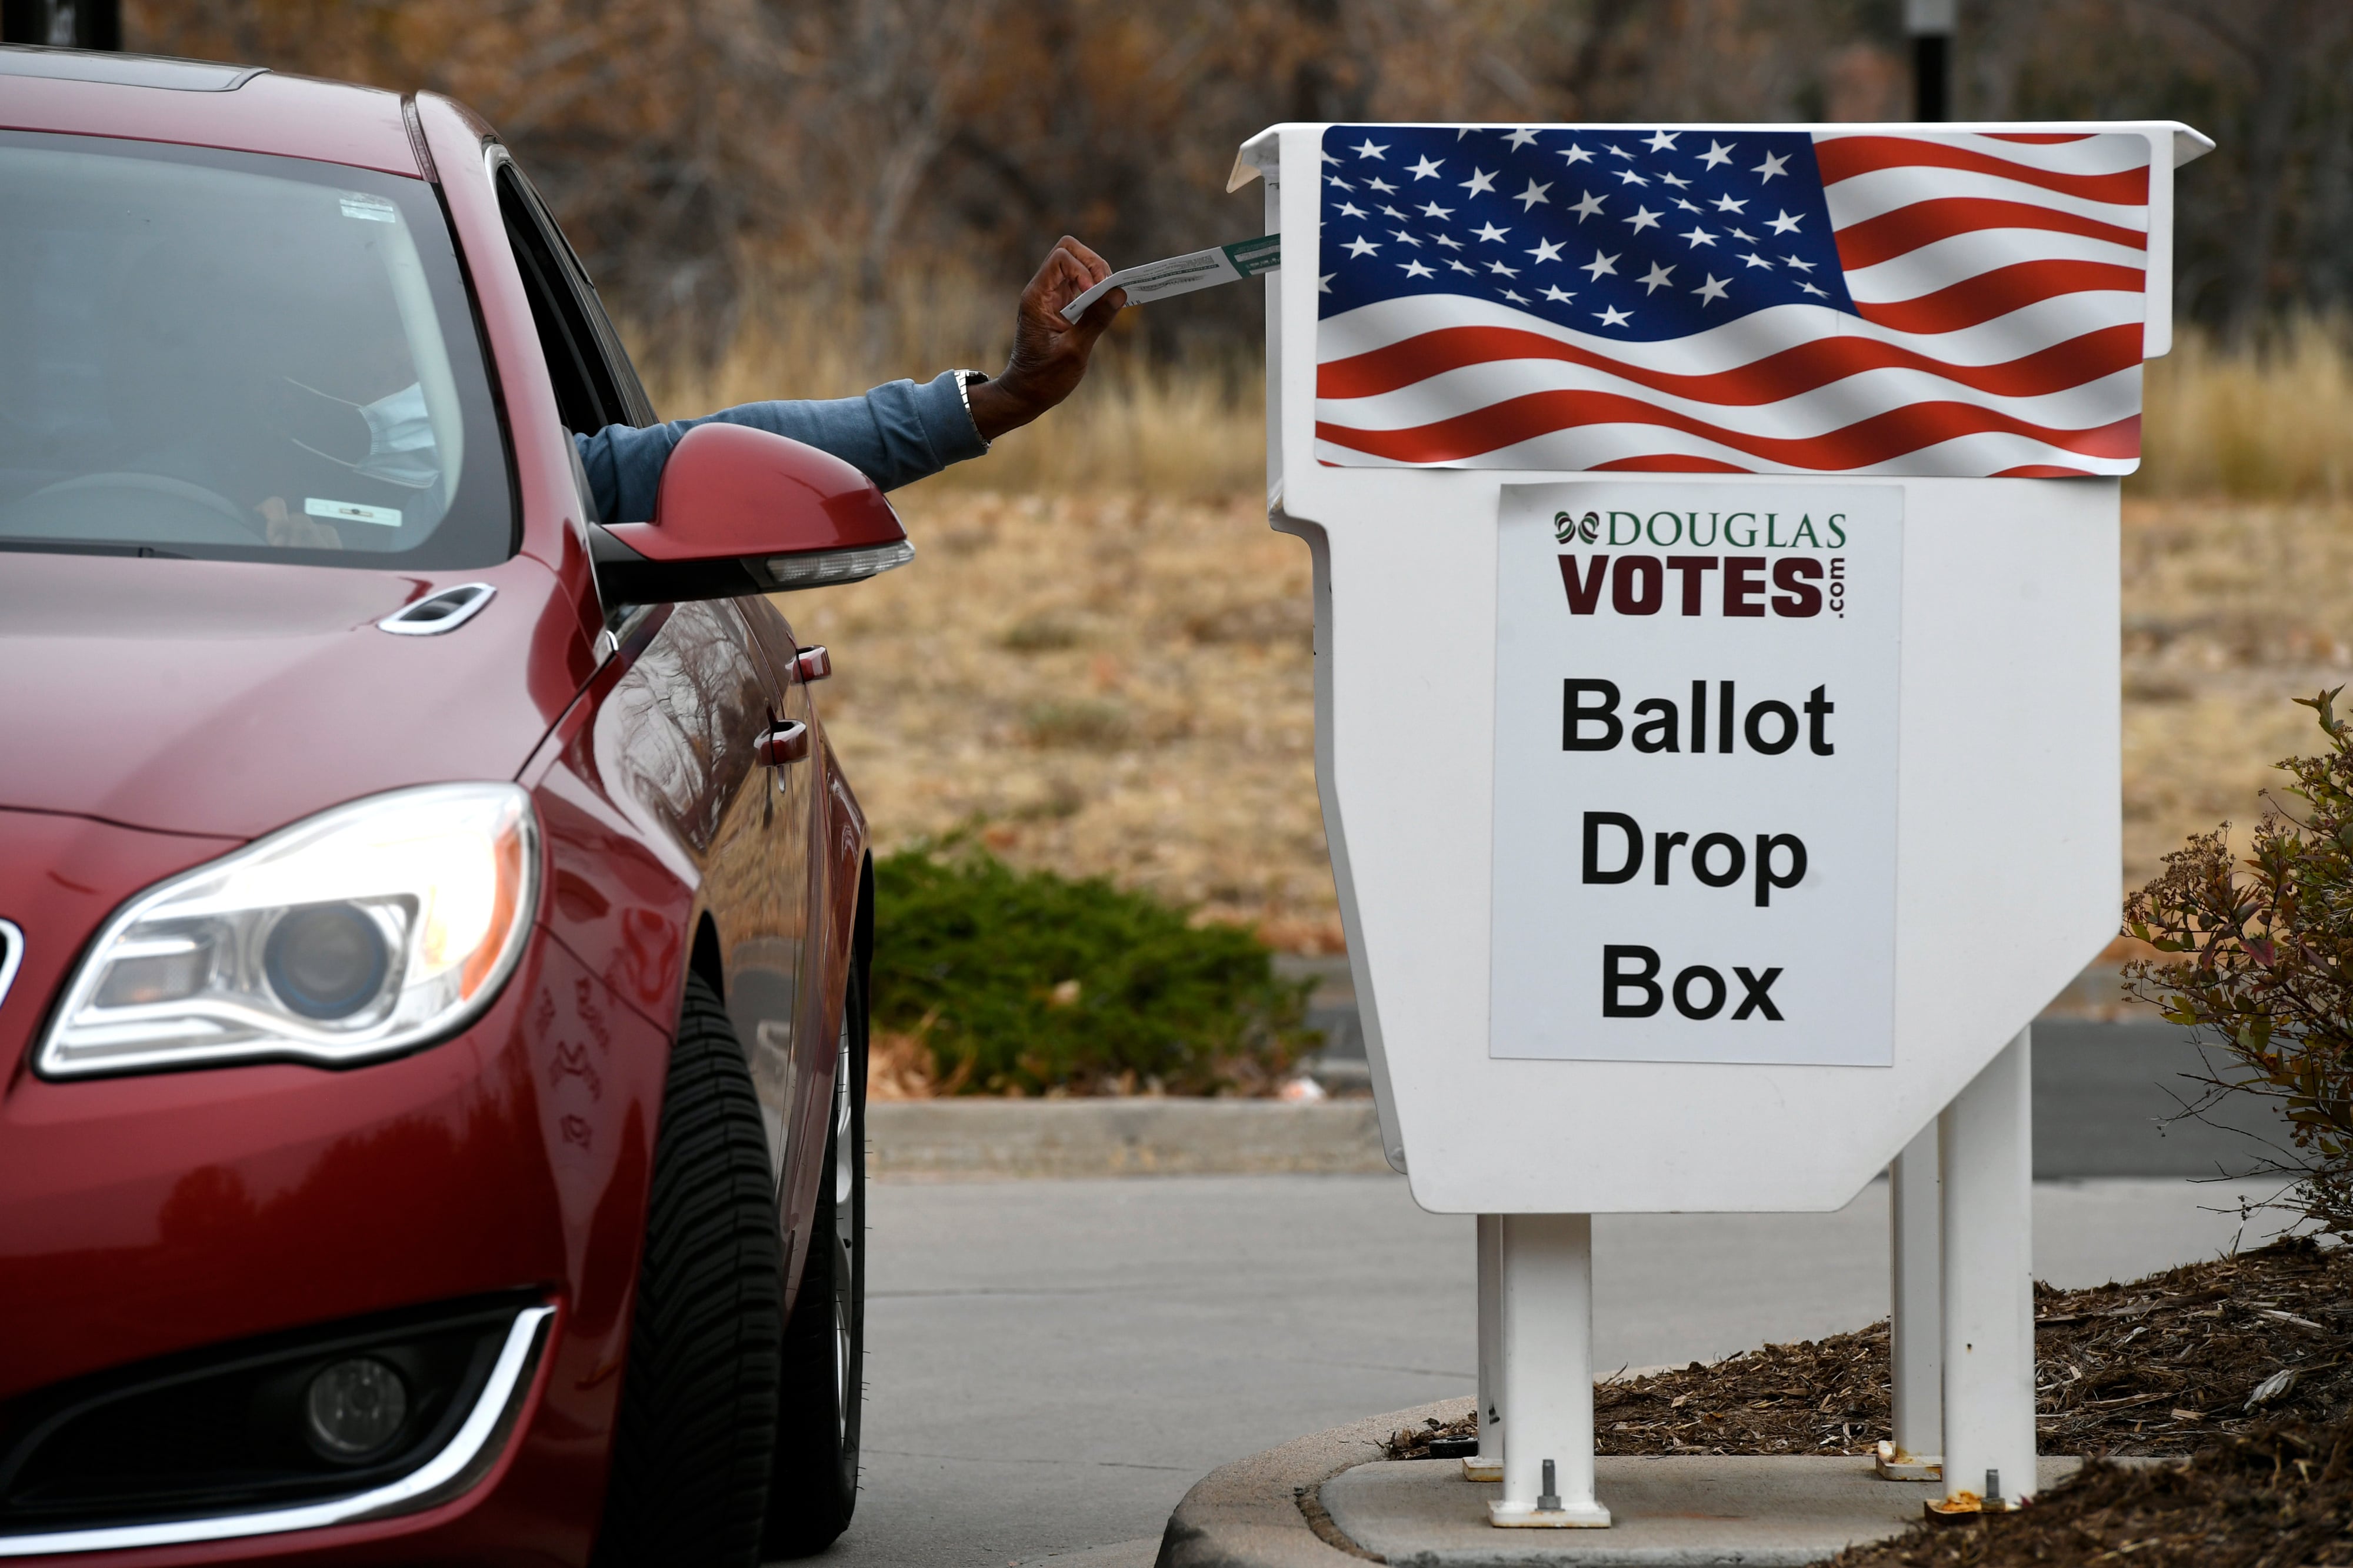 A driver in a red sedan drops a ballot into a box that reads “McDouglas VOTES. Ballot Drop Box.”